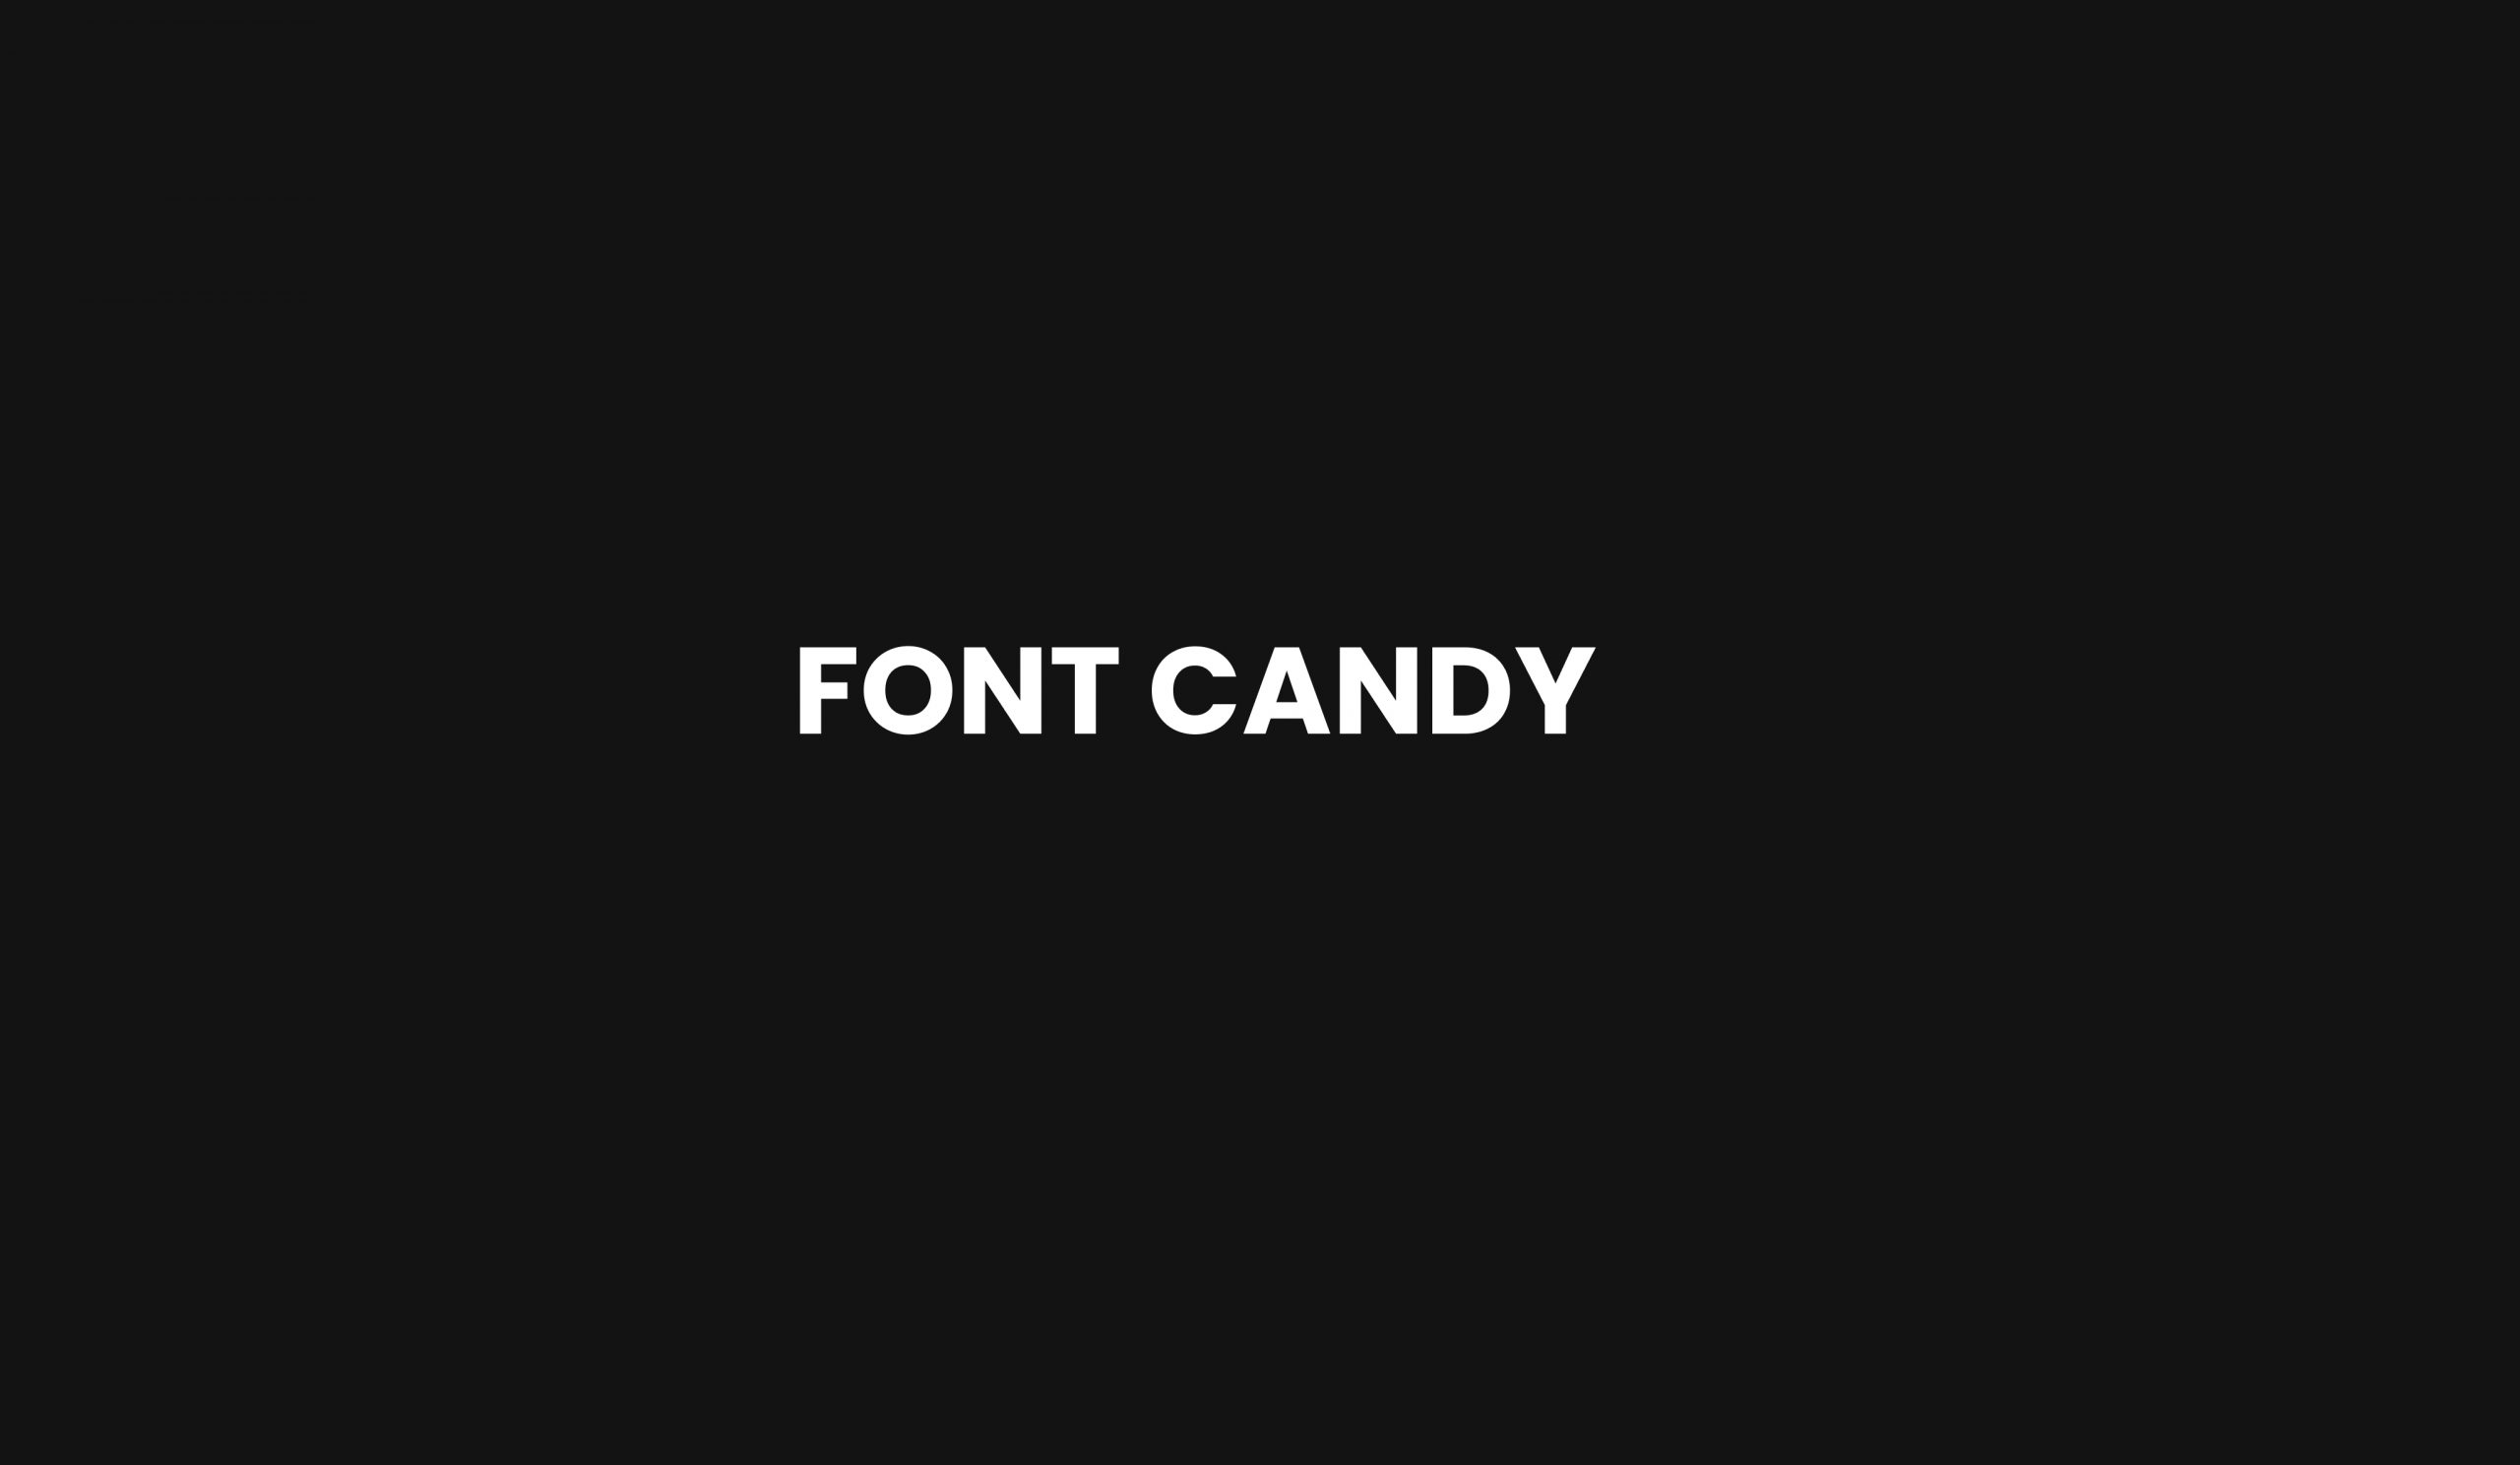 Font candy